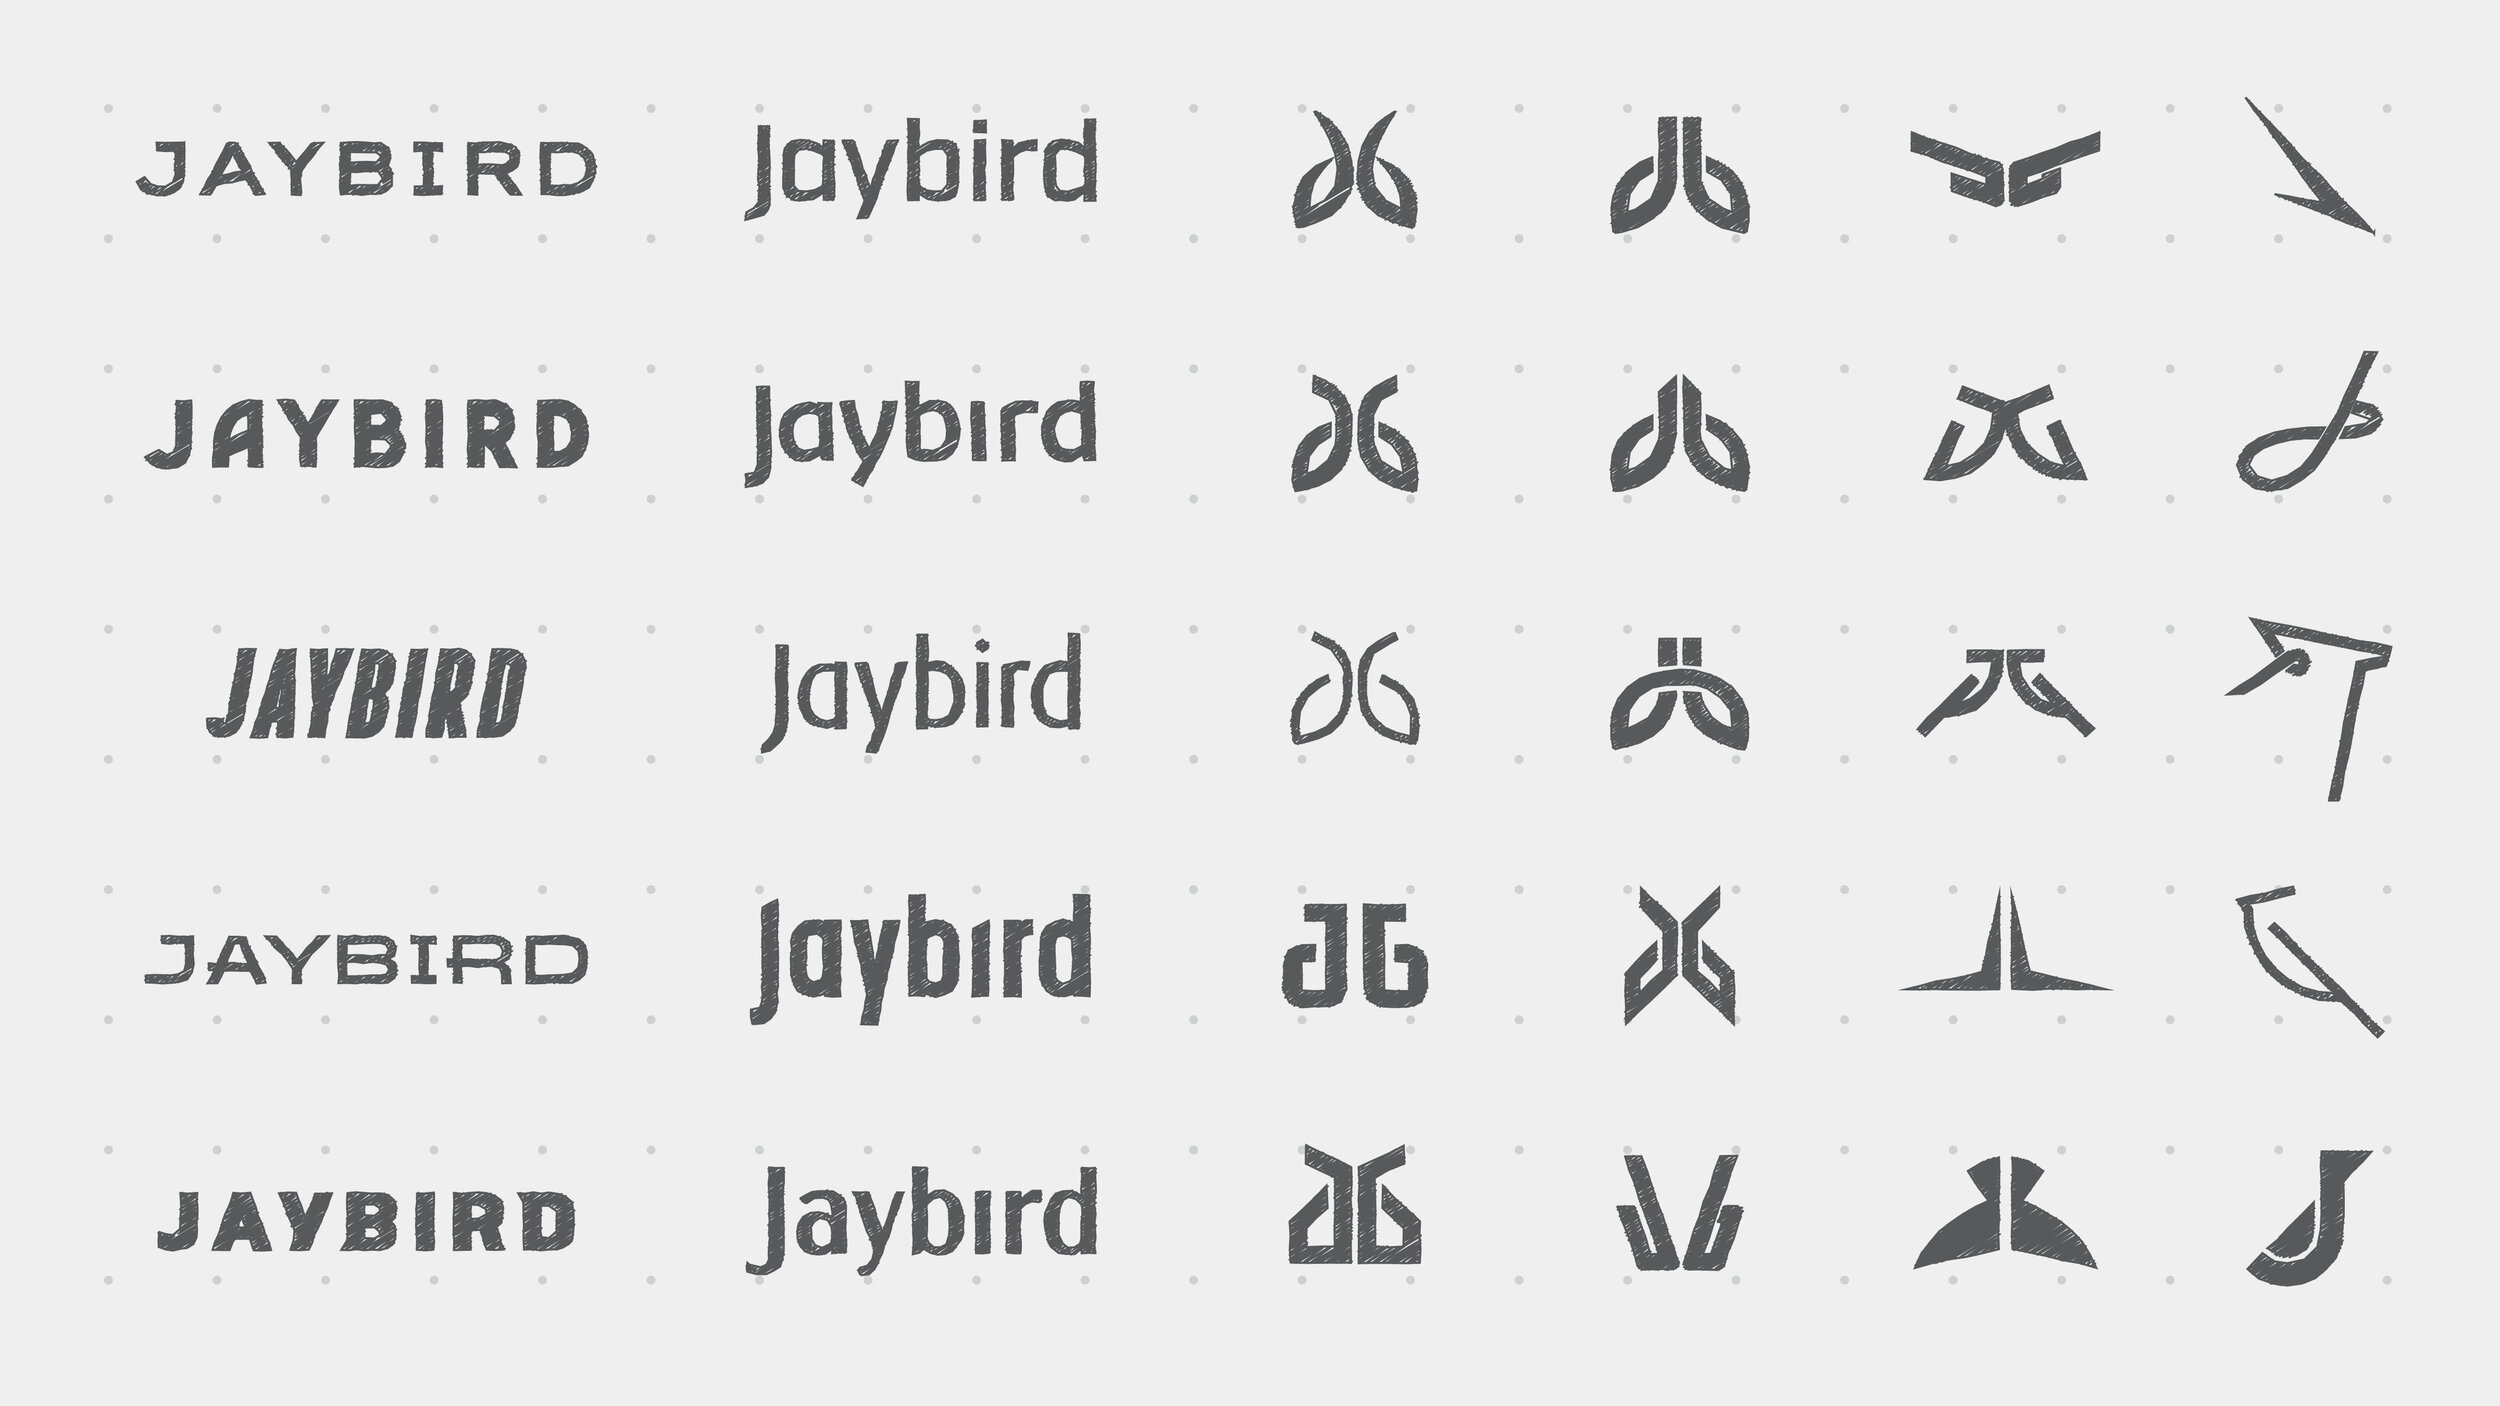 Jaybird_VB_CaseStudy_MT_V1_Logotype.jpg